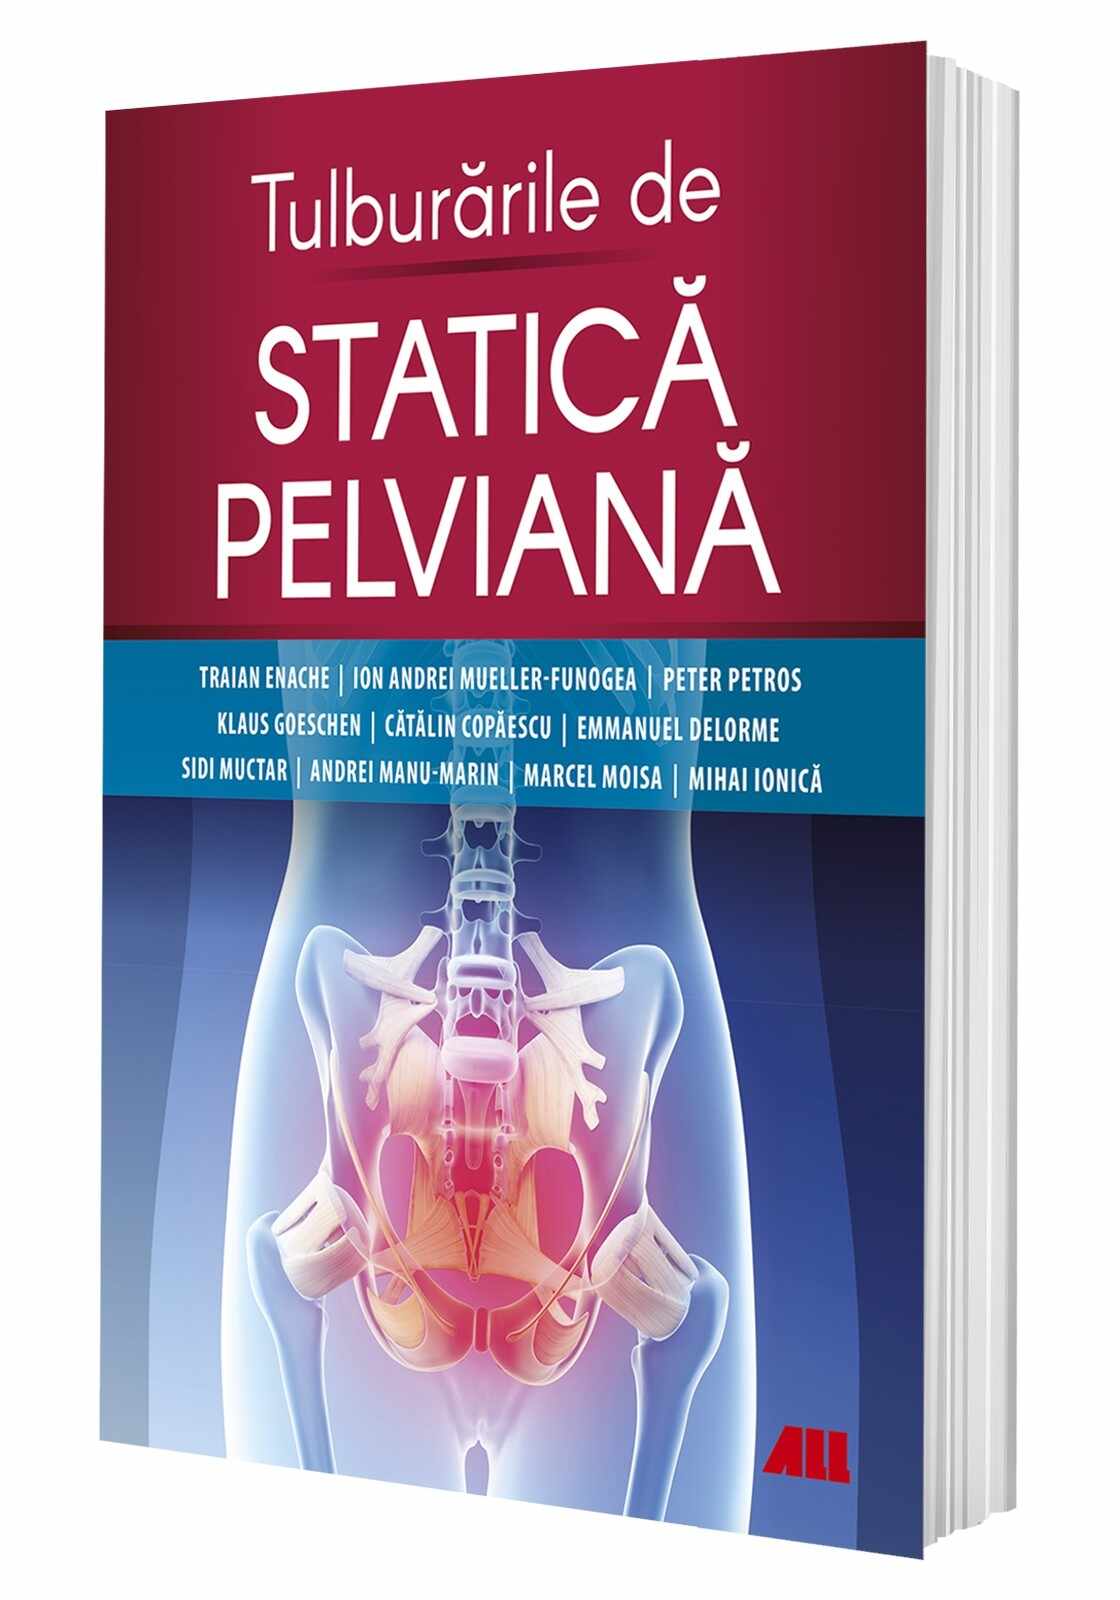 Tulburarile de statica pelviana | Traian Enache, Ion Andrei Mueller-Funogea, Peter Petros, Marcel Moisa